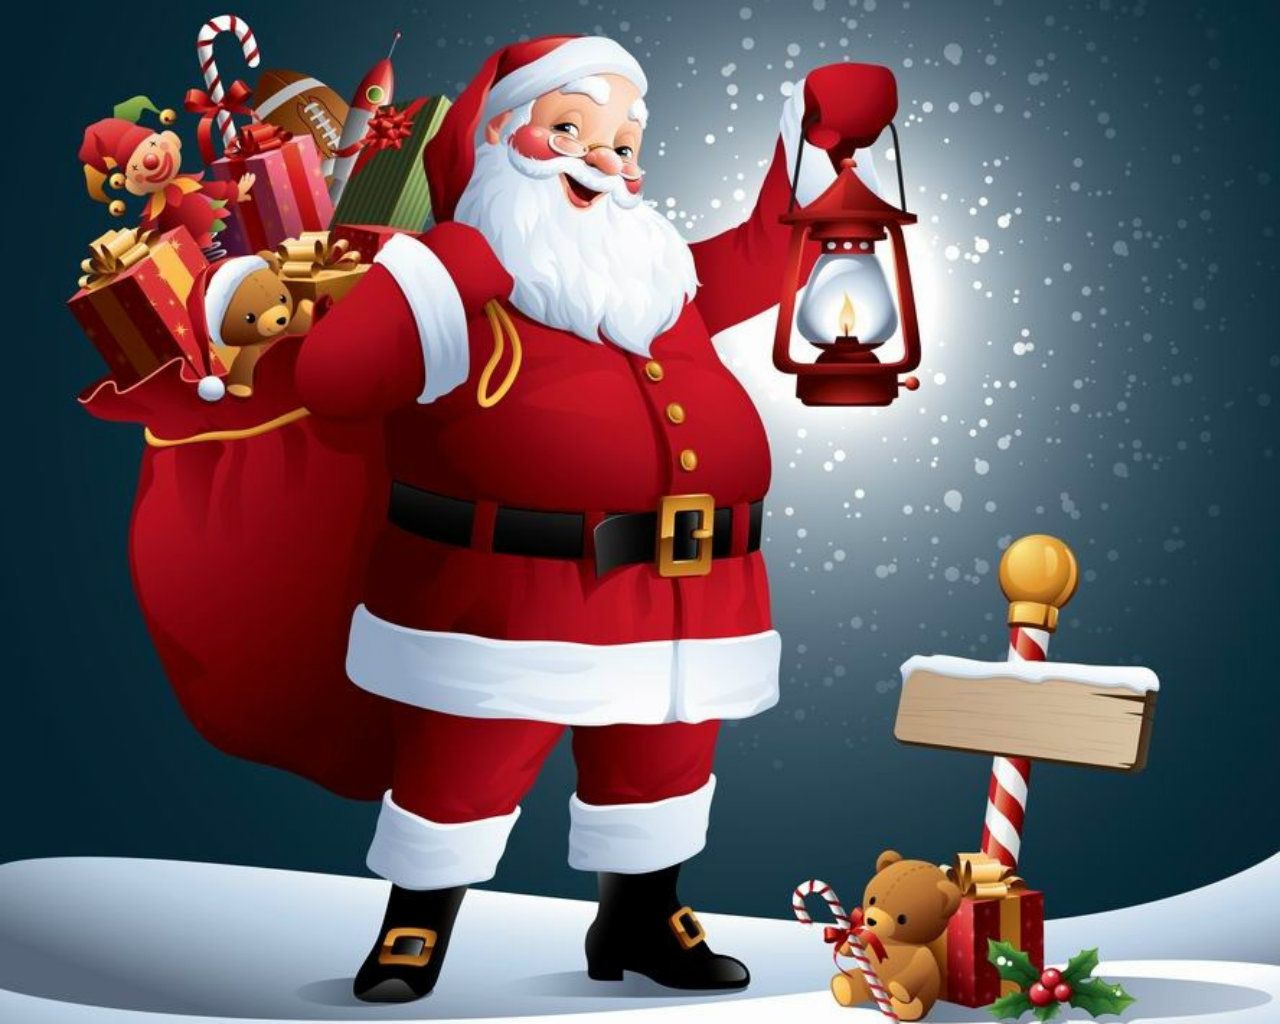 Santa Claus Christmas Wallpaper For Desktop And Mobile Phones